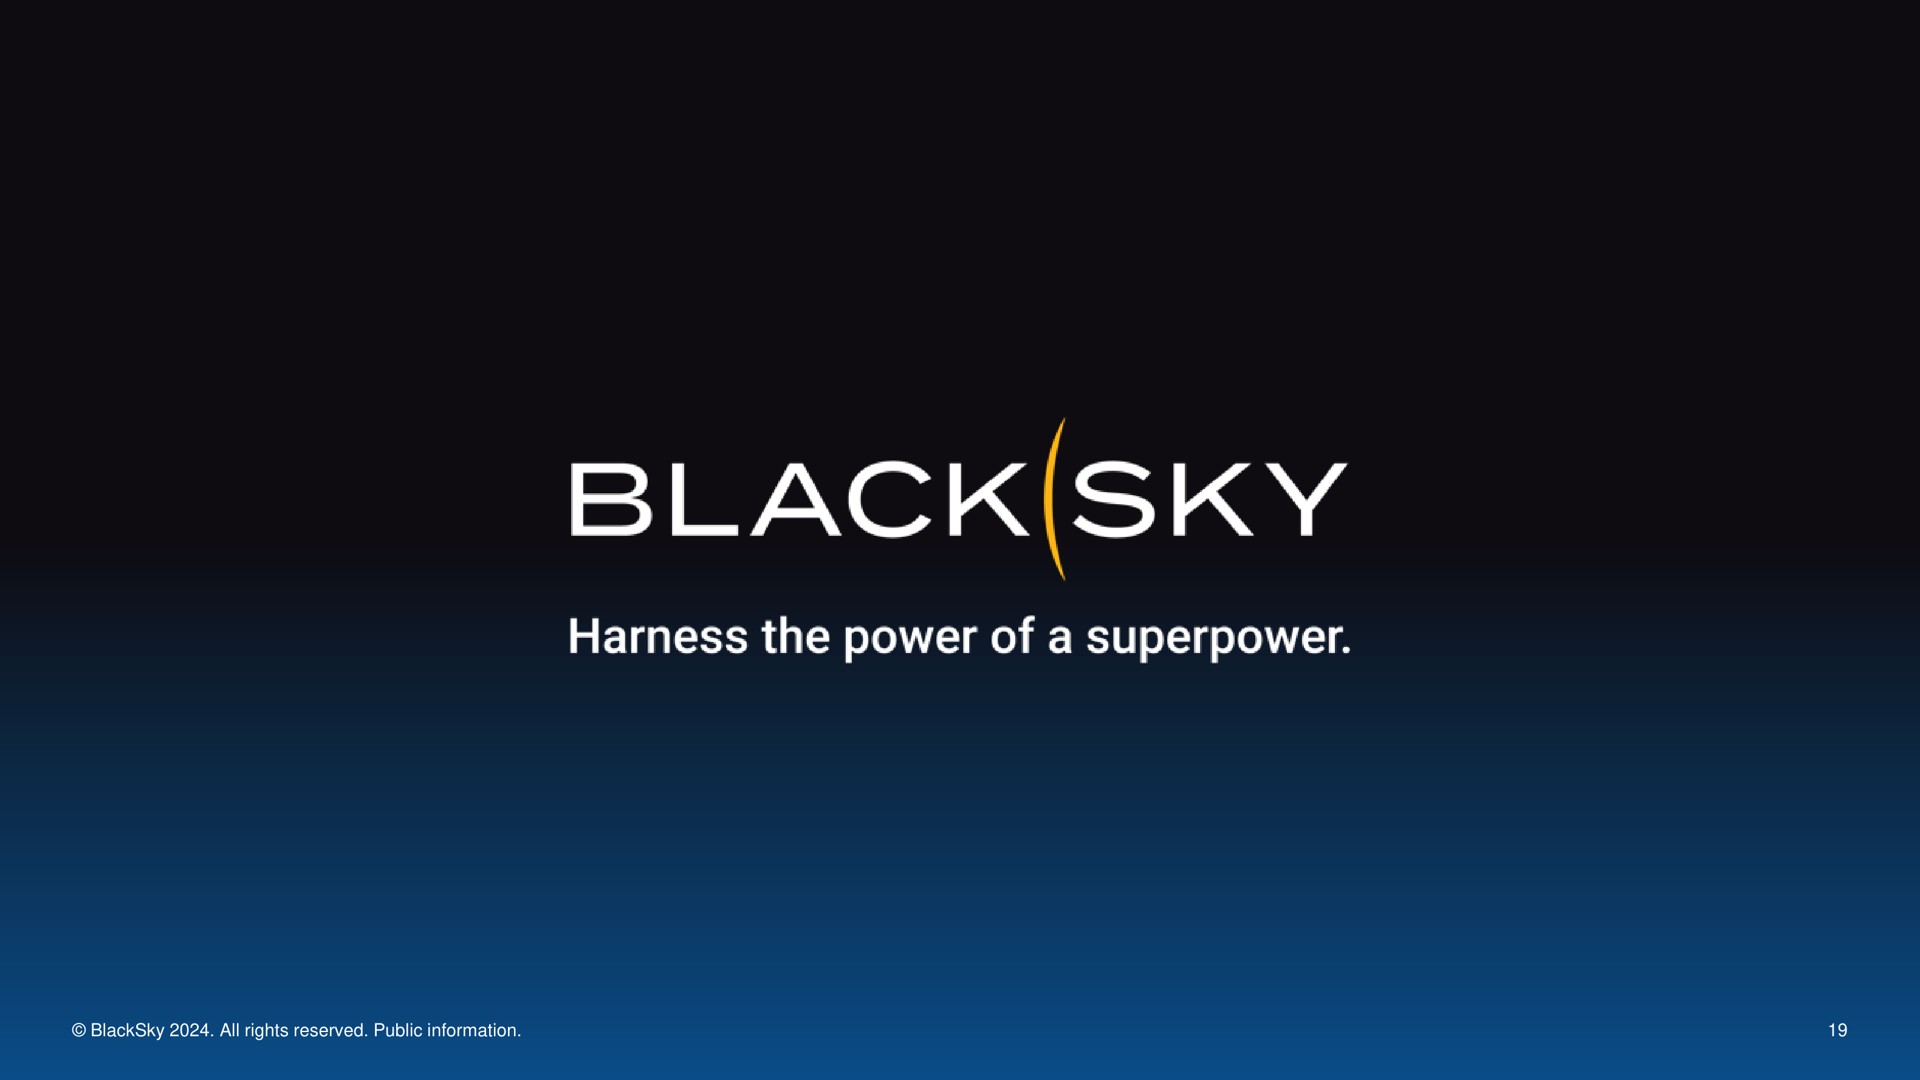 black sky harness the power of a superpower | BlackSky